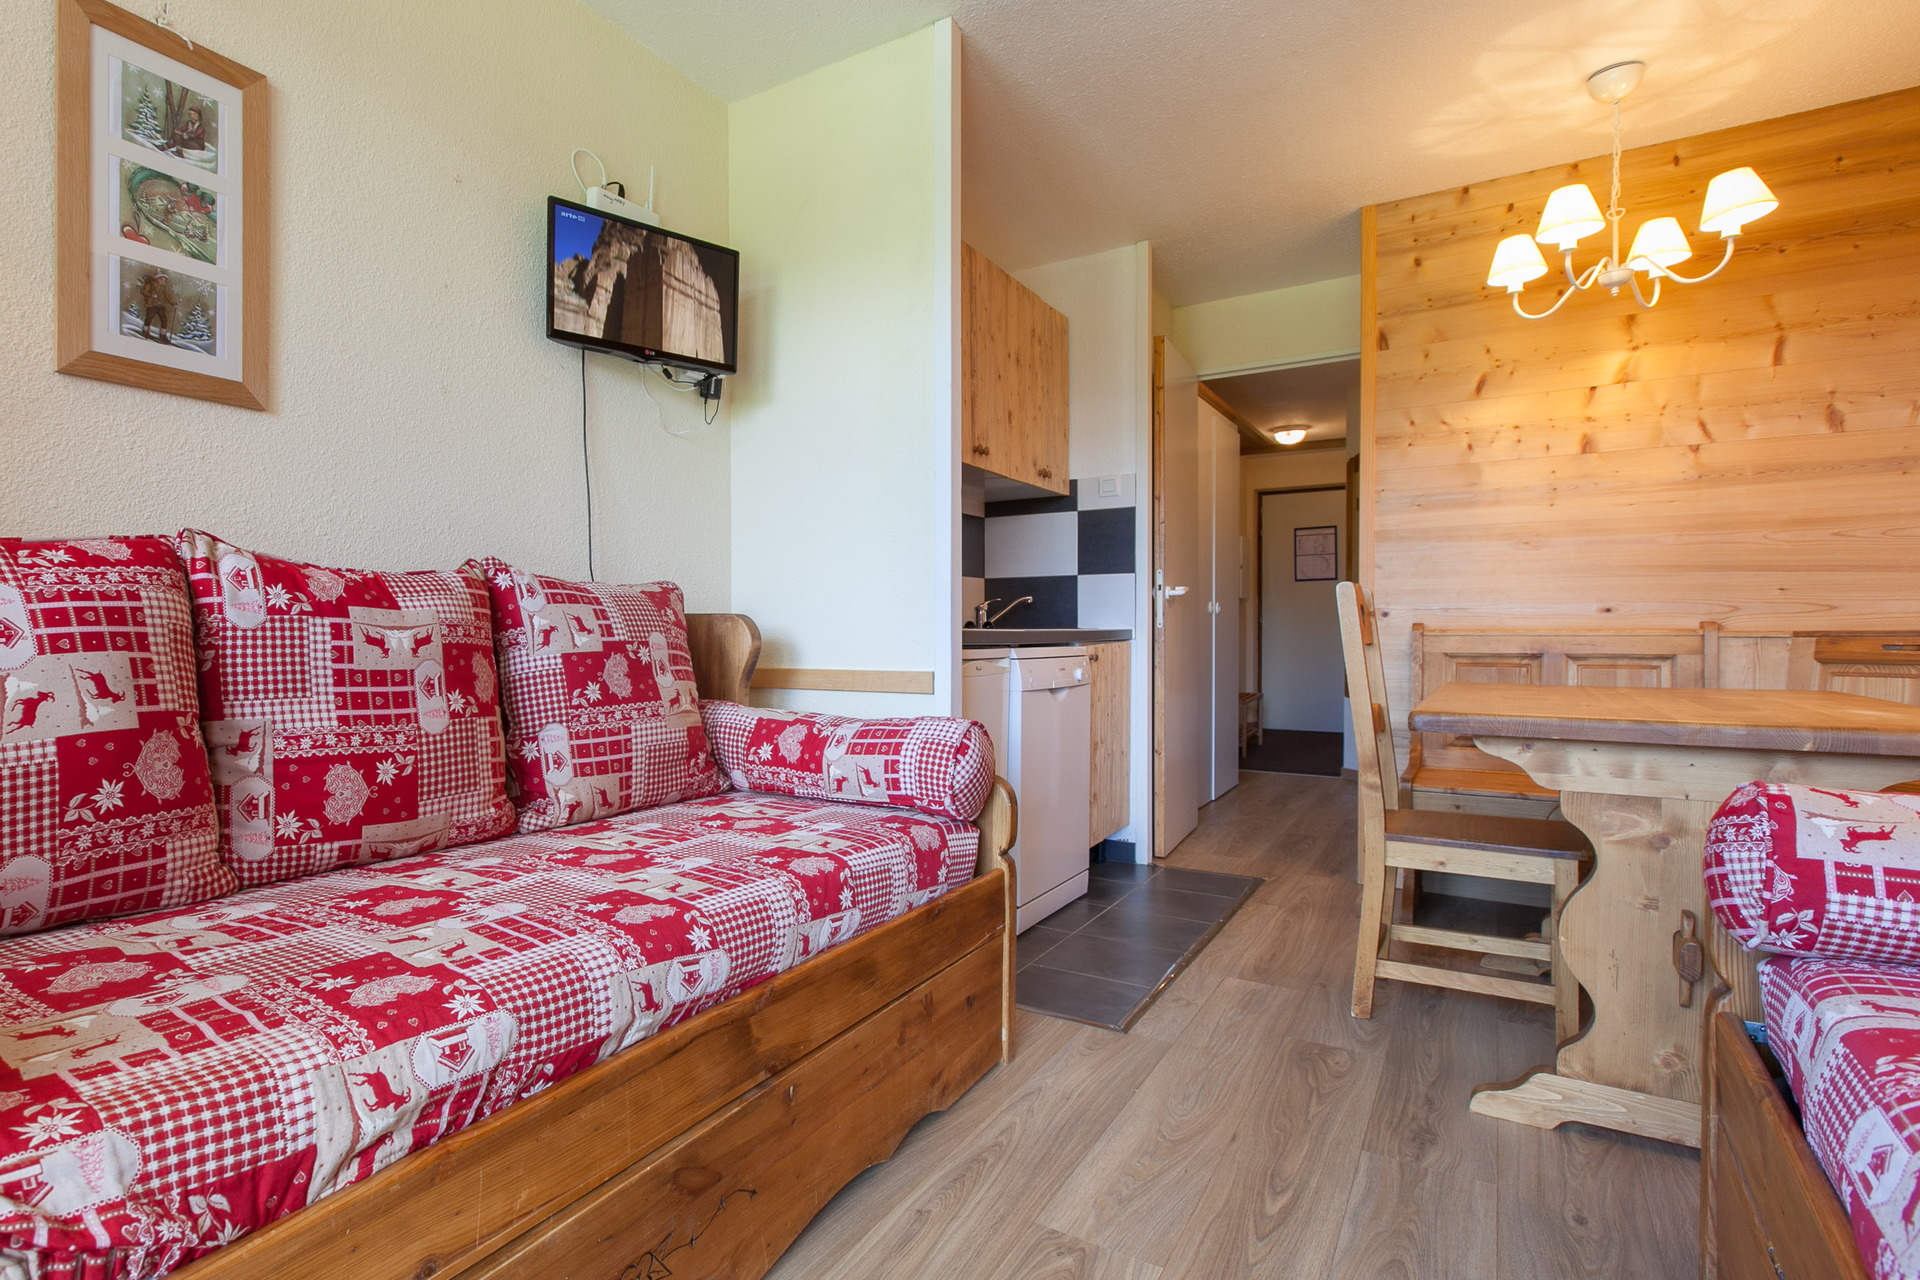 Rent a 2 rooms (1 bedroom) at Avoriaz